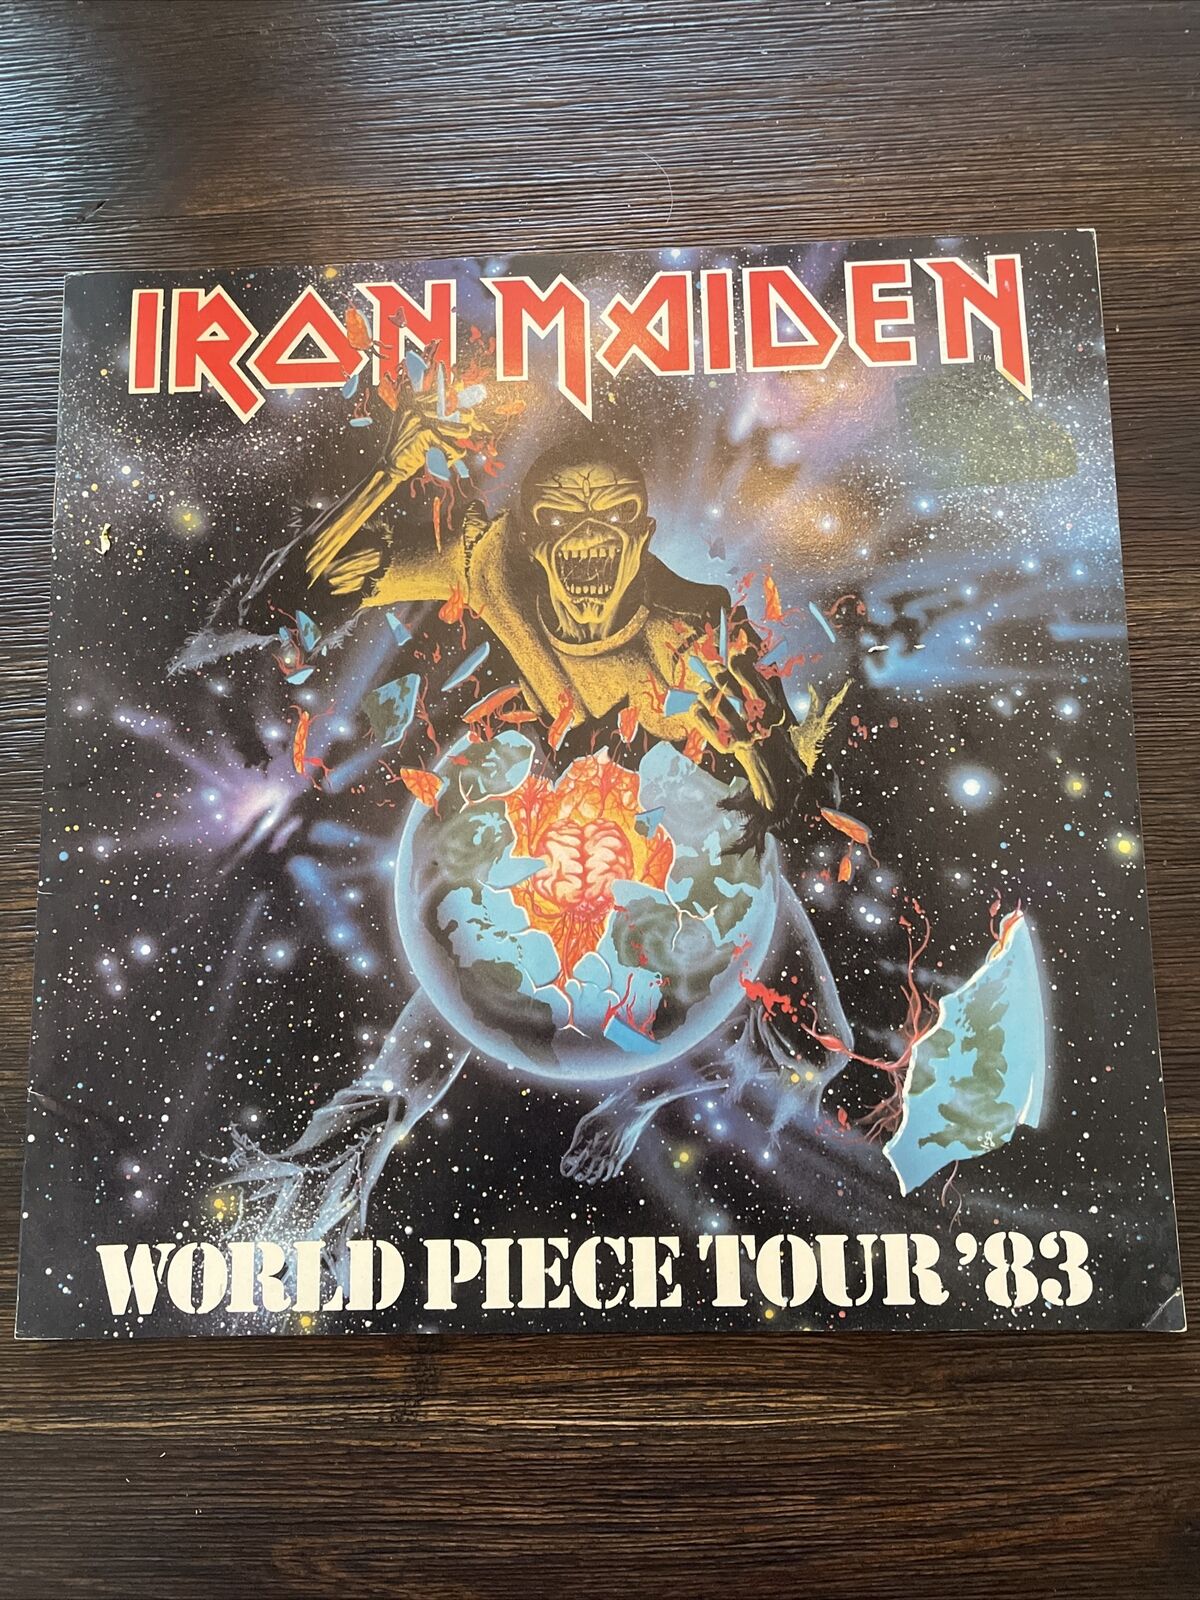 Iron Maiden “world Piece Tour ‘83” Tour Program - Great Shape!